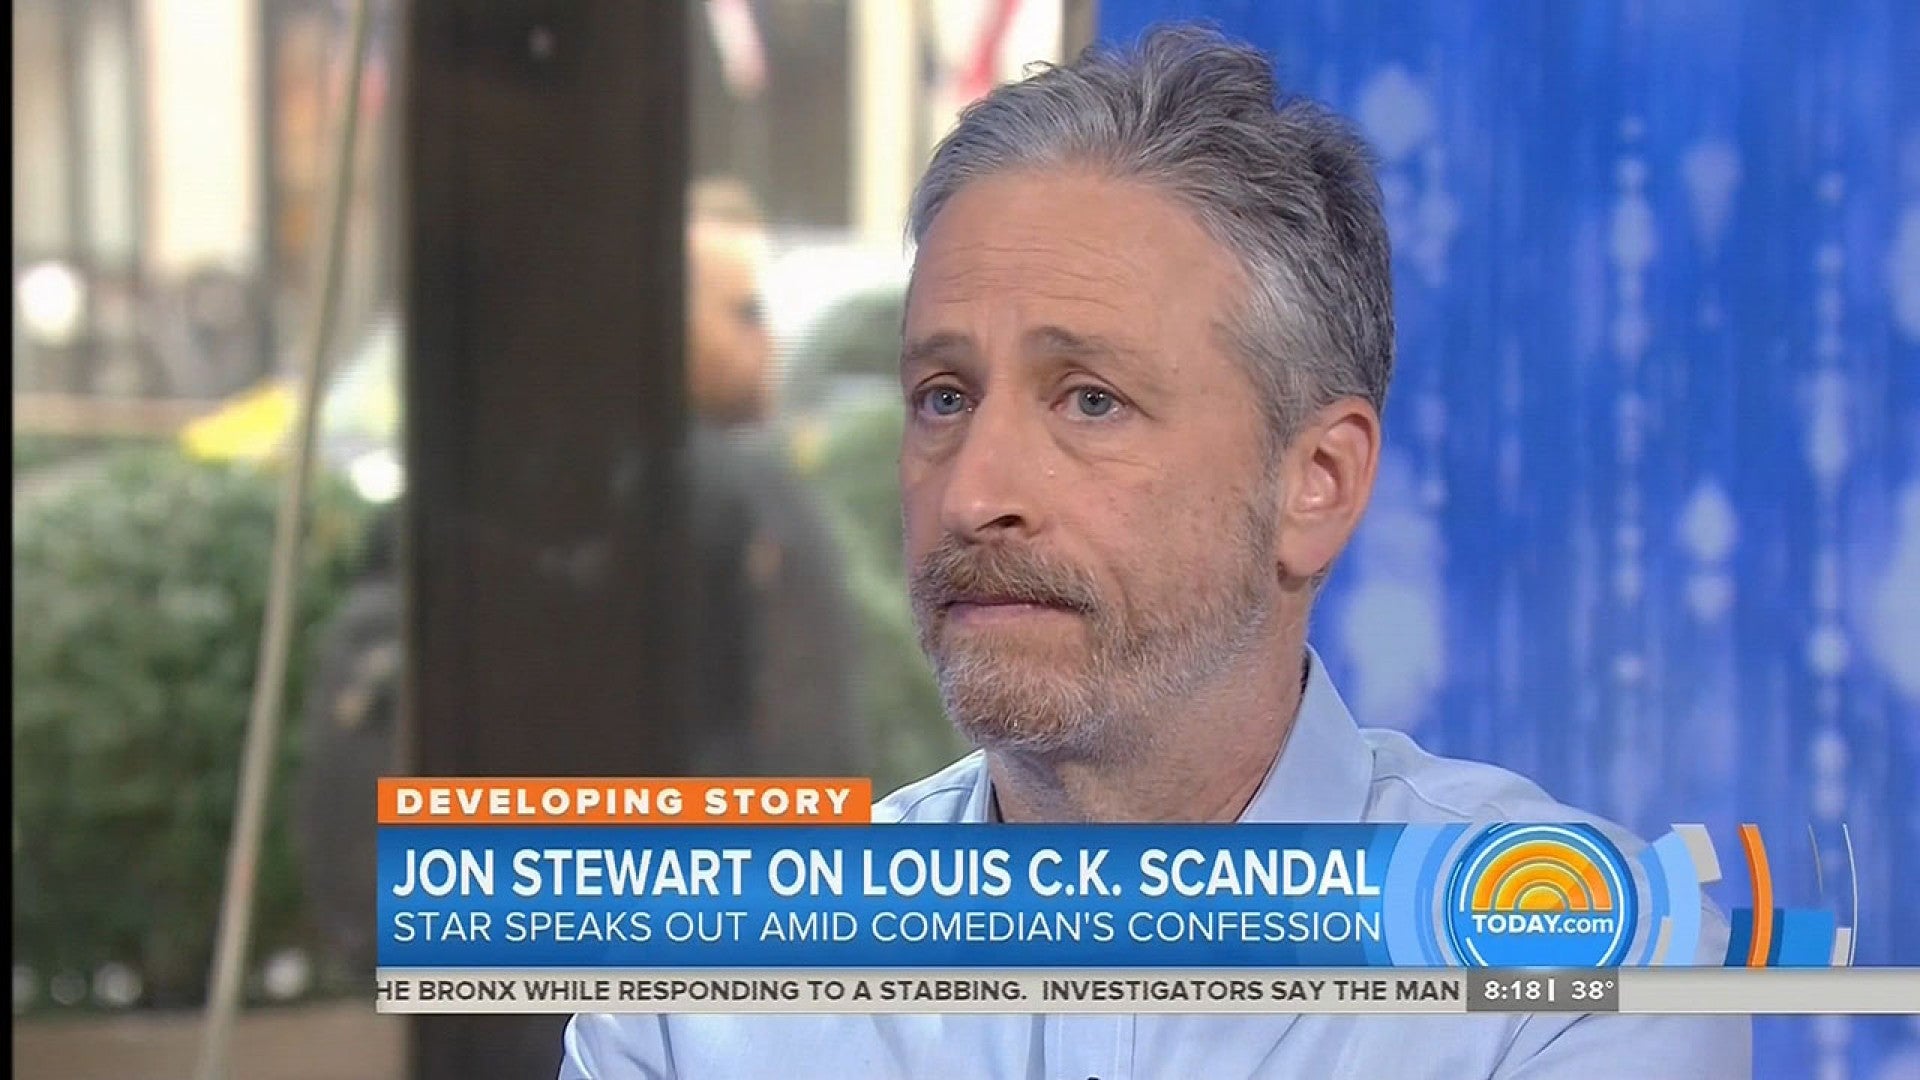 Sarah Silverman Addresses Louis C.K. Sexual Misconduct on Hulu Show